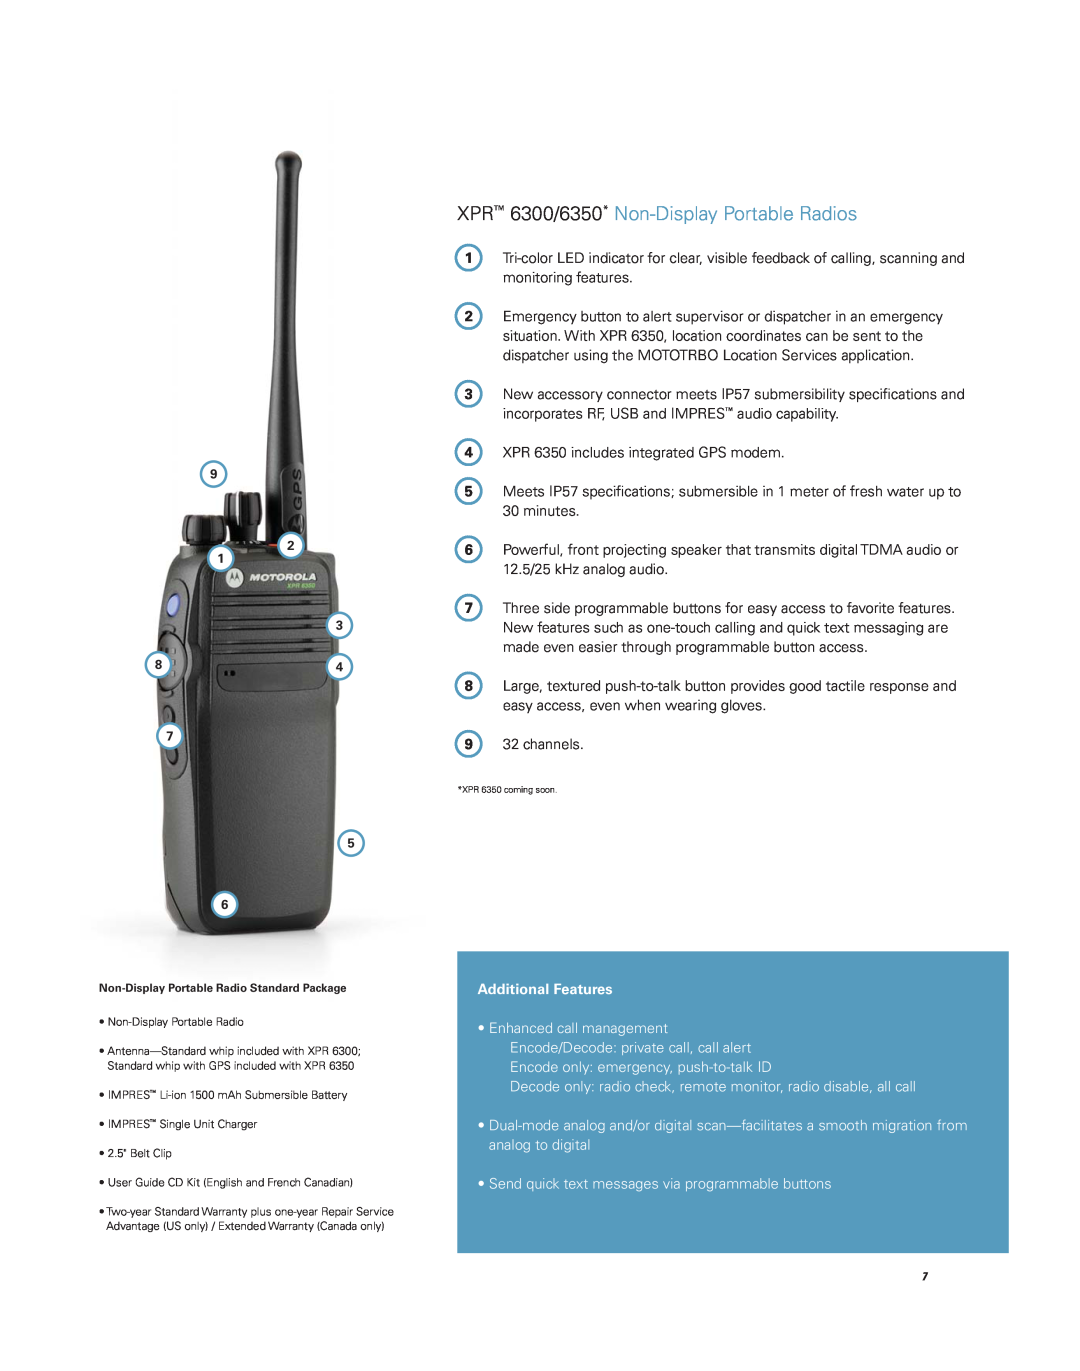 Motorola Professional Digital Two-Way Radio System brochure XPR 6300/6350* Non-Display Portable Radios 